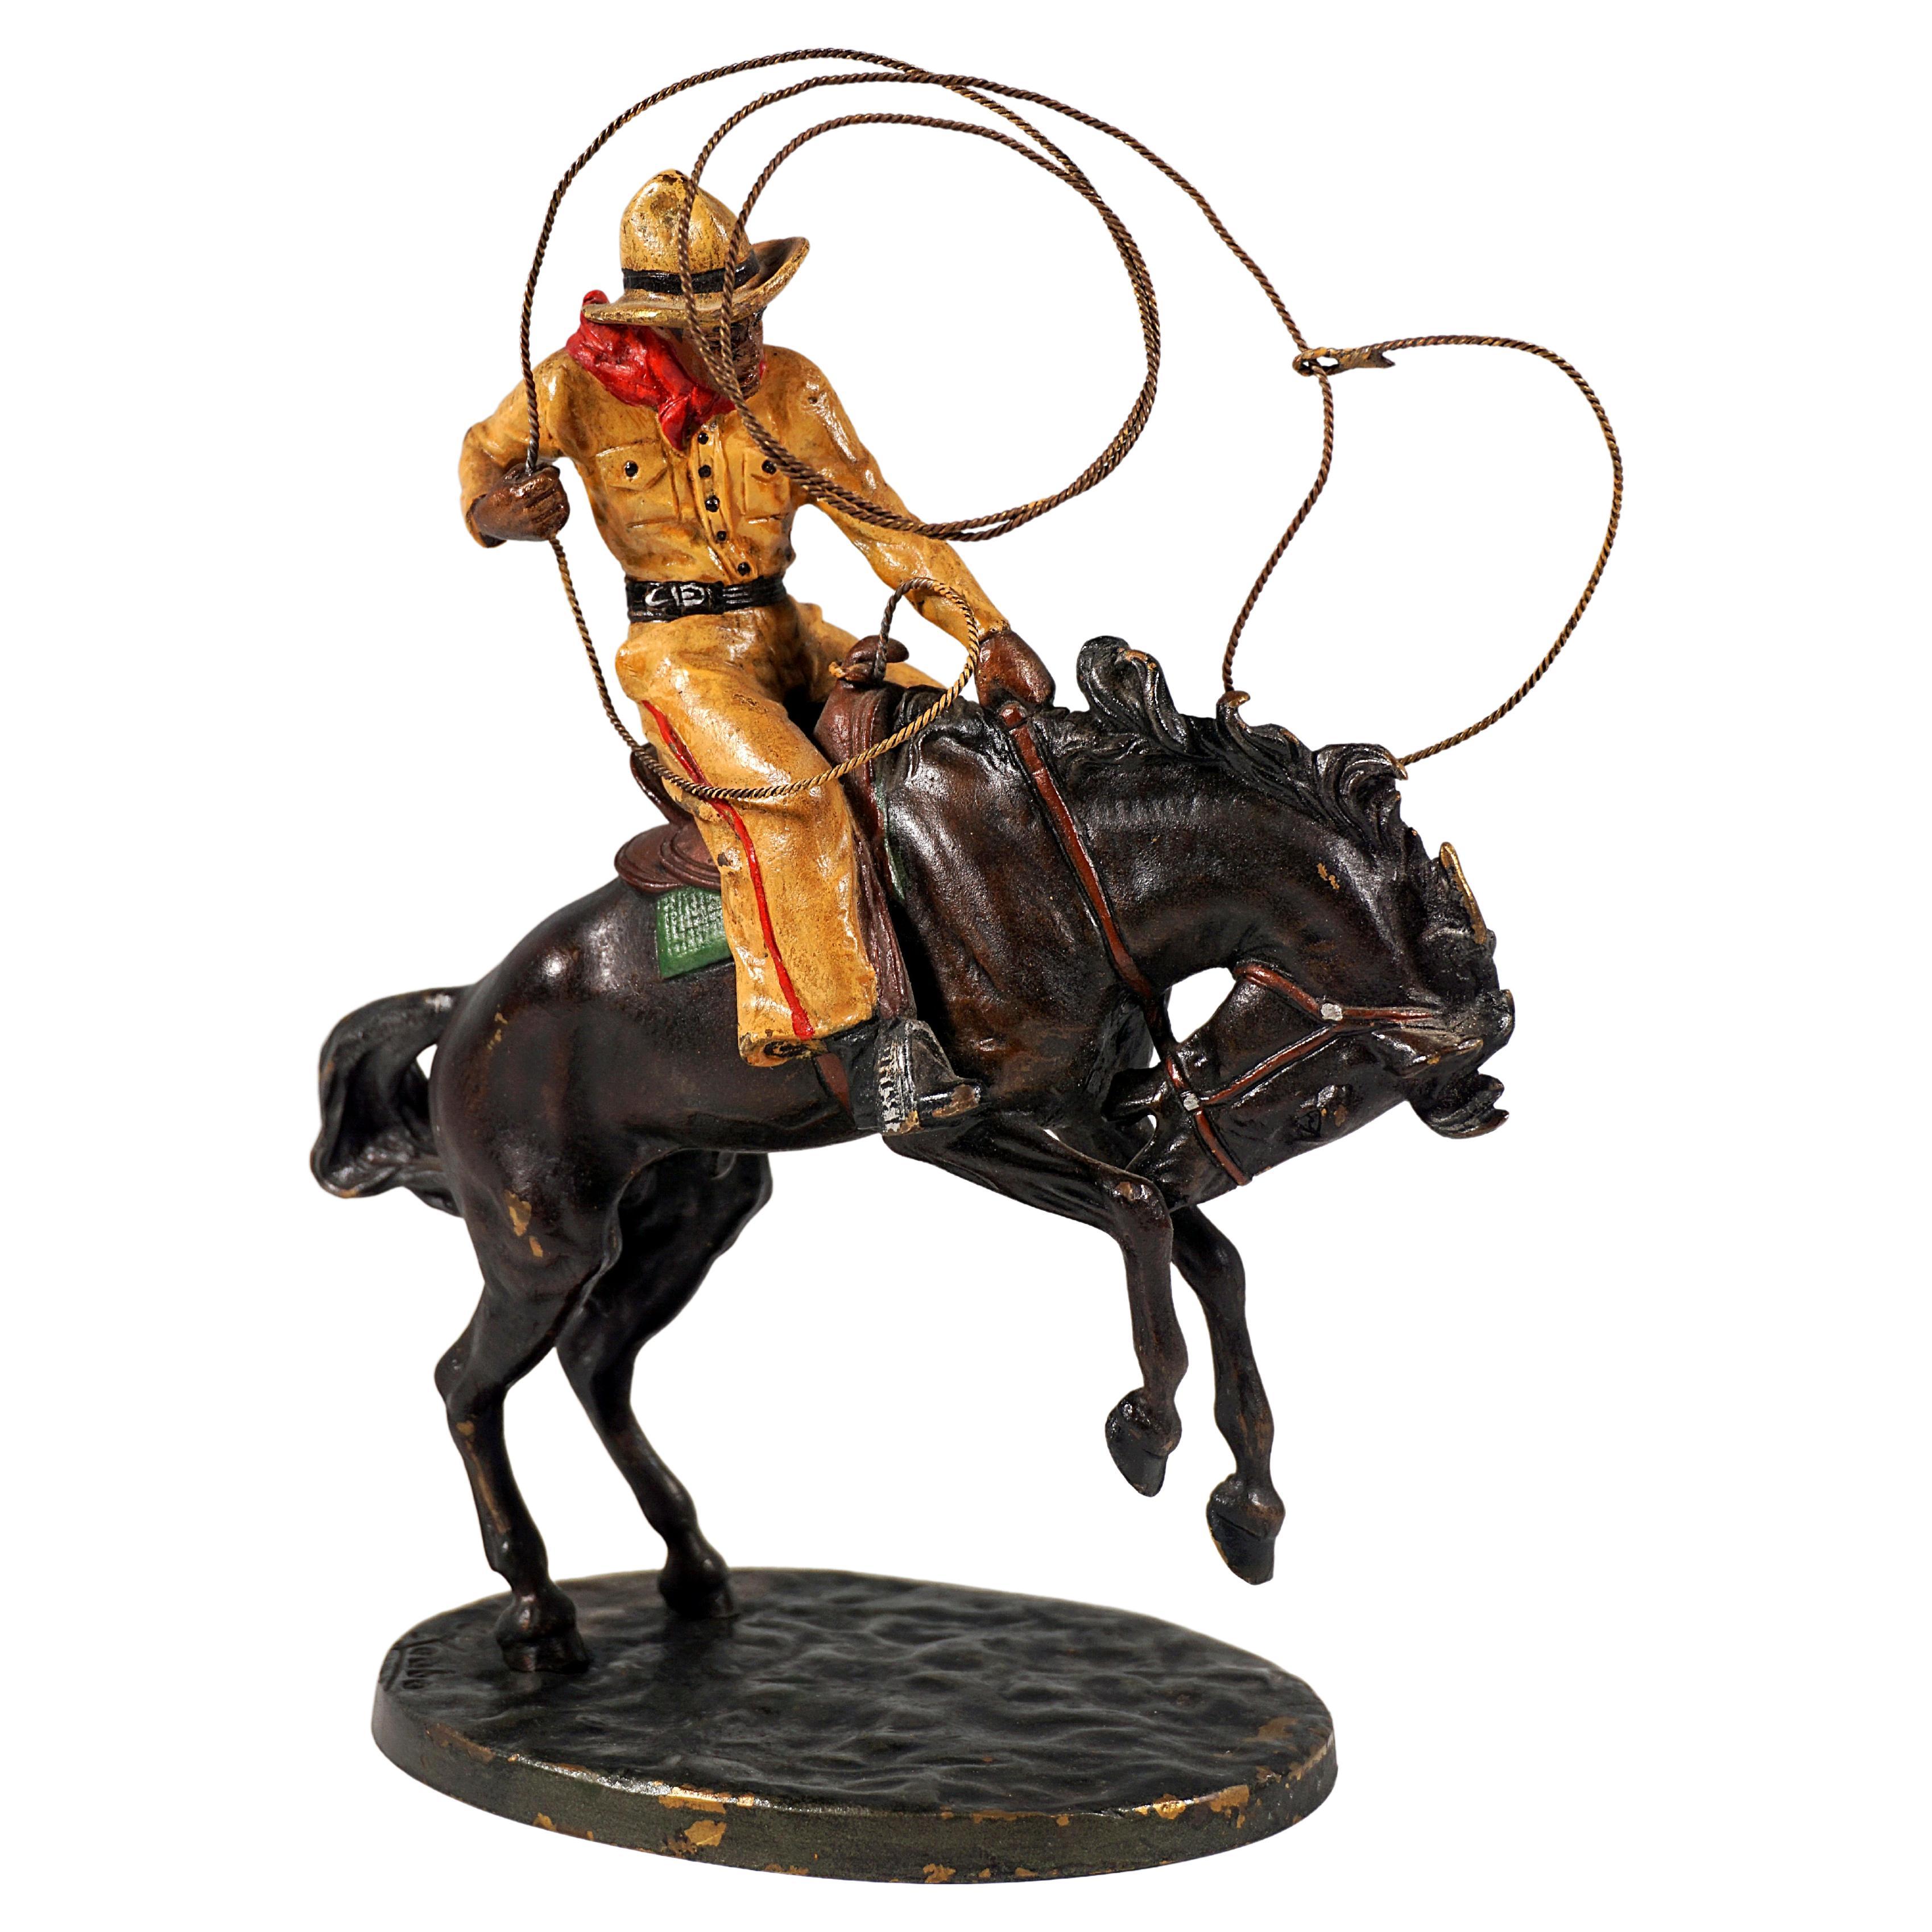 Cowboy with Lasso on Horse, Viennese Bronze Figure by Carl Kauba, Around 1920